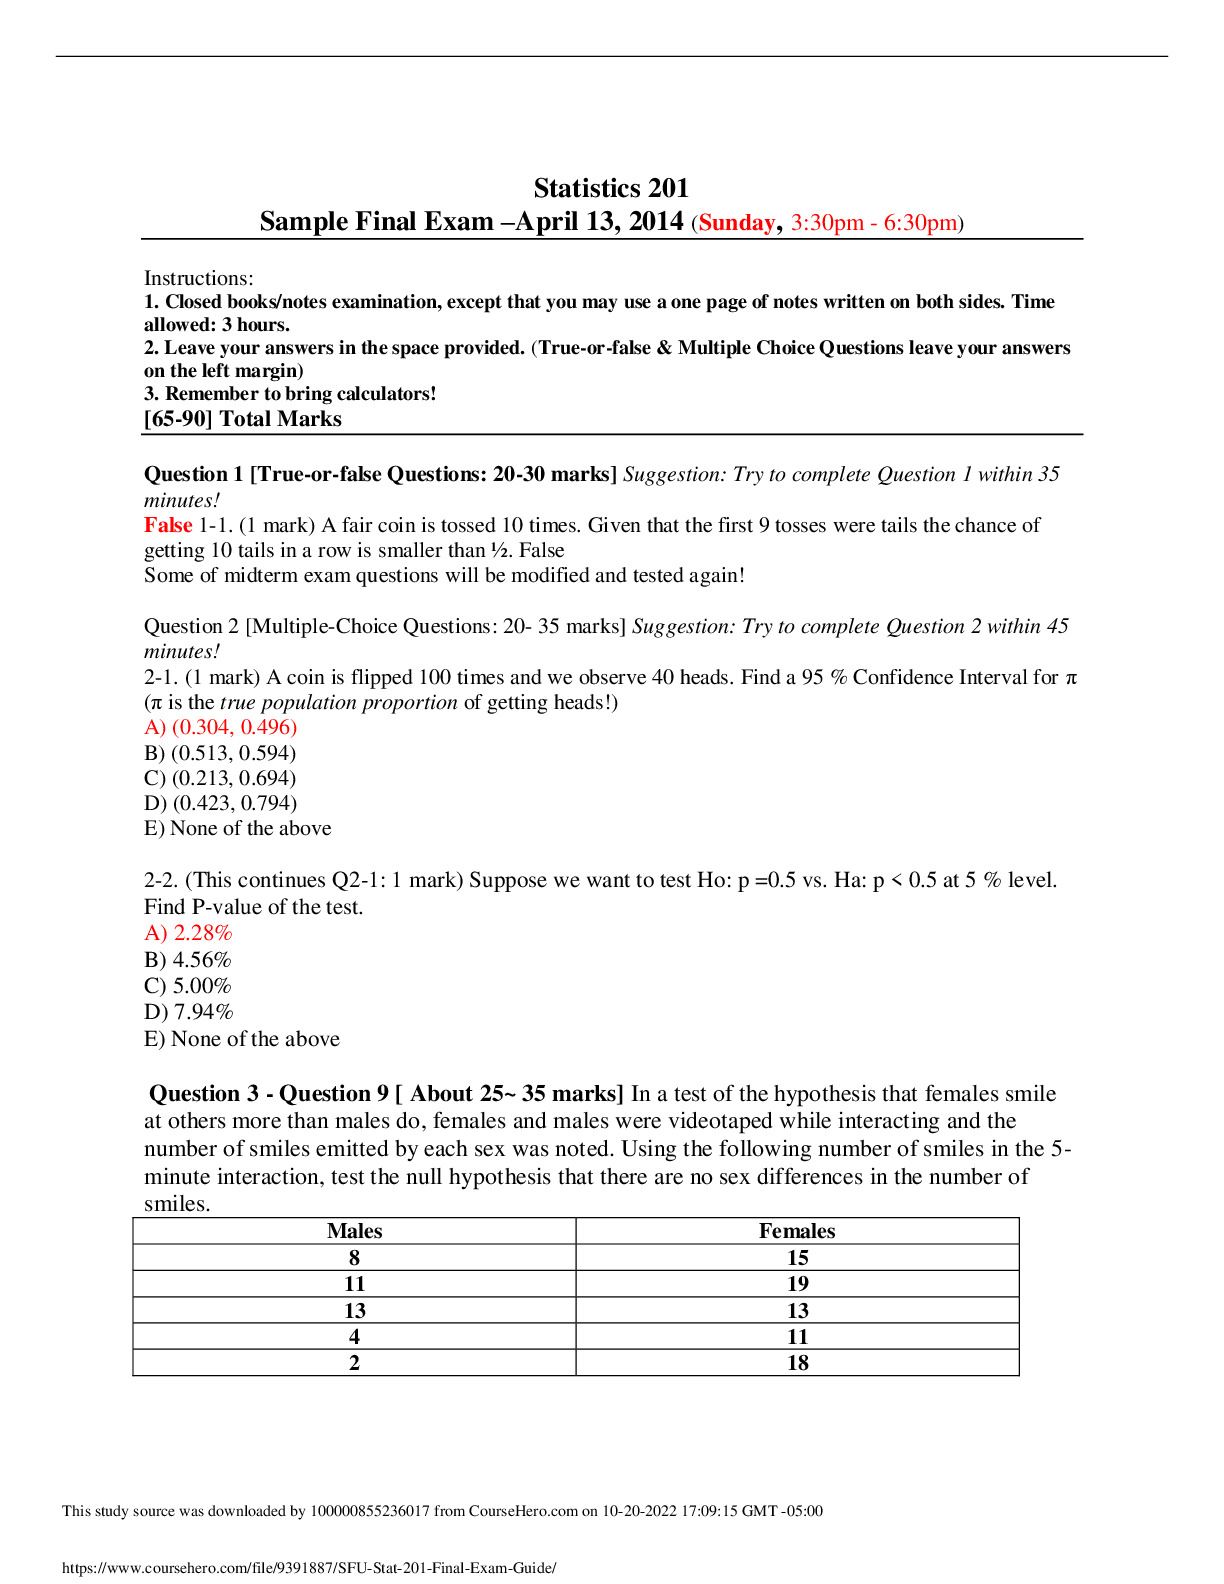 SFU_Stat_201_Final_Exam_Guide